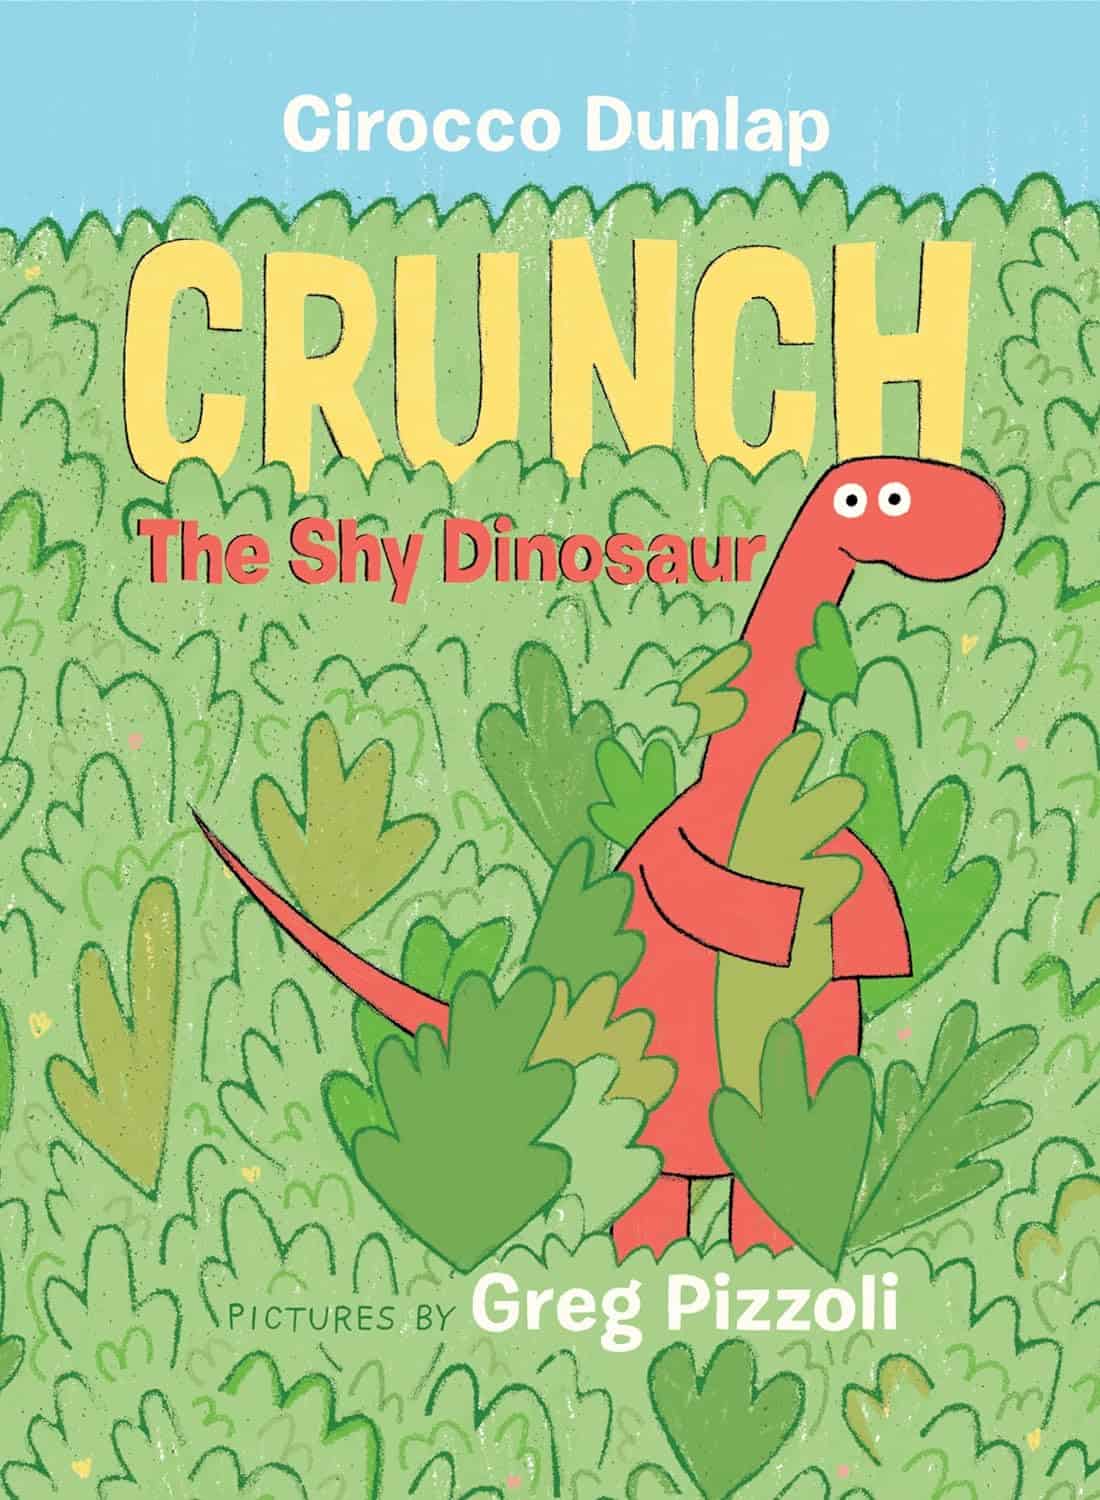 Crunch, the Shy Dinosaur by Cirocco Dunlap (Pre-K-2)